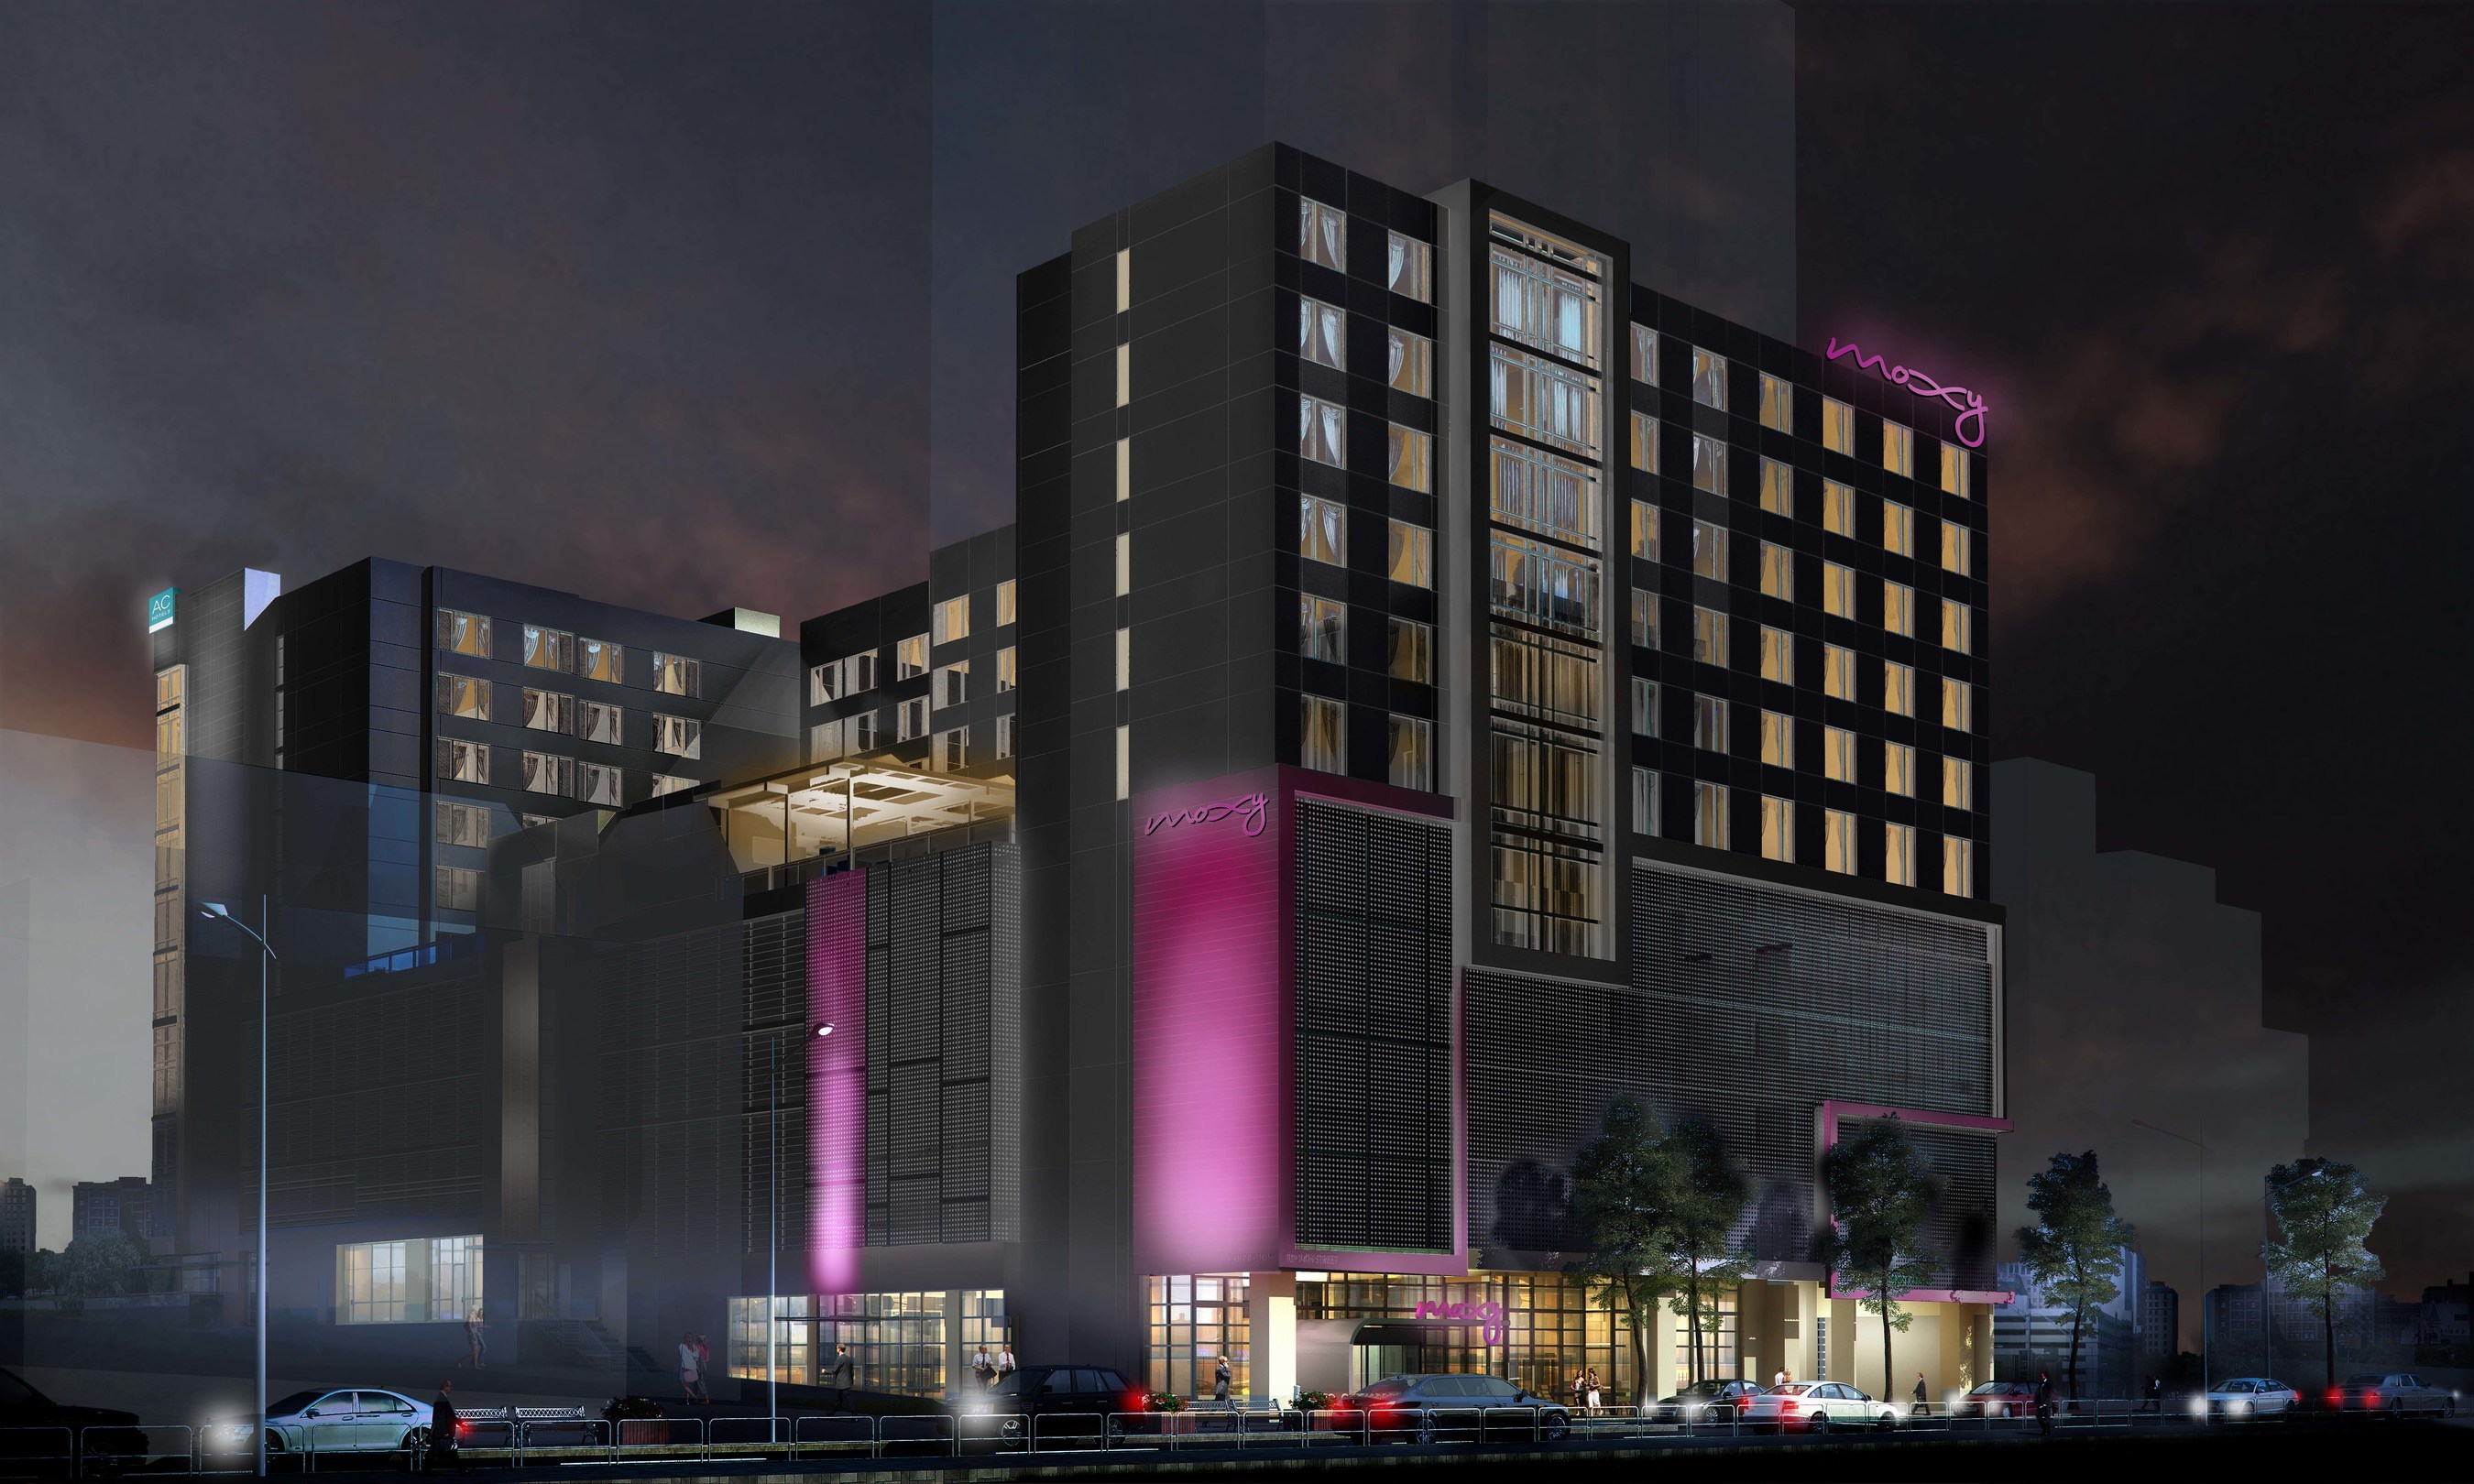 Ac Hotel Atlanta Midtown And Moxy Atlanta Midtown Open In Business